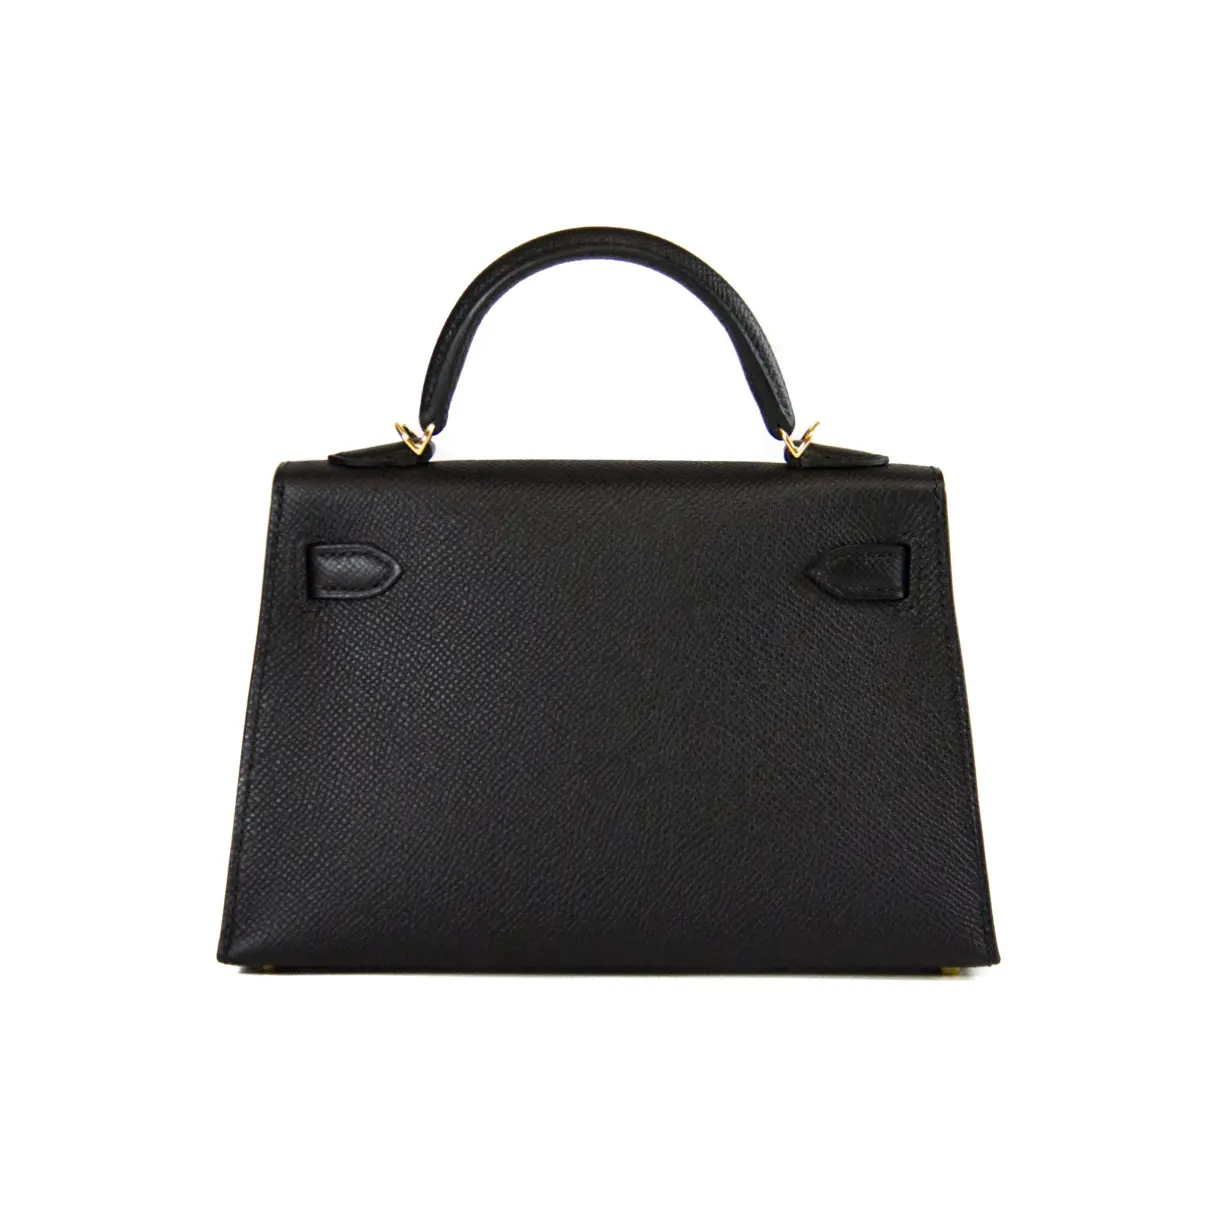 Buy Hermès Kelly Mini leather handbag online